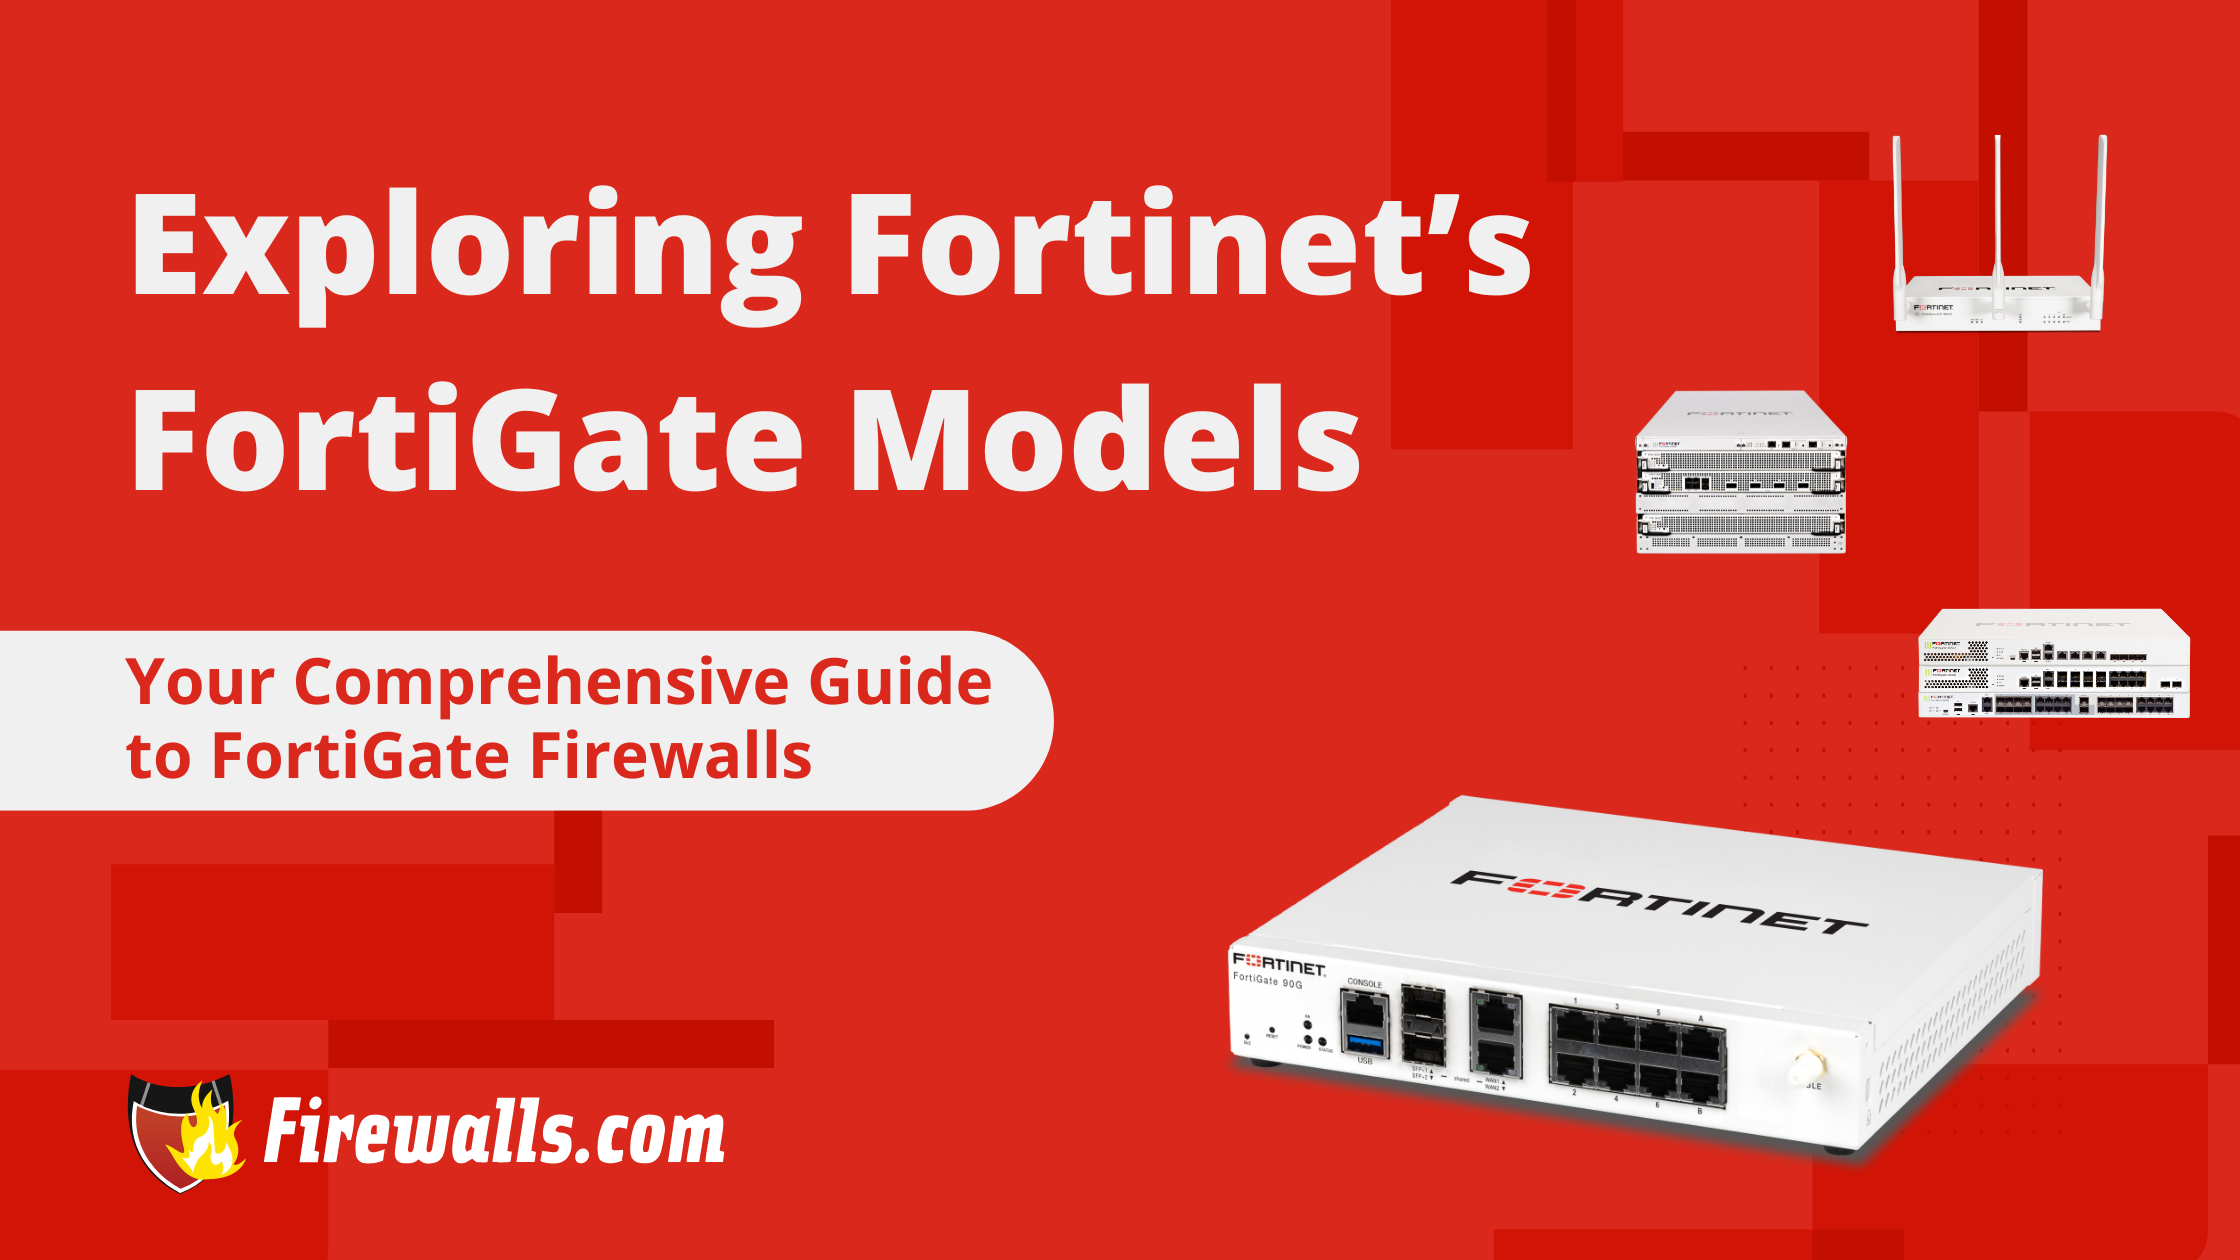 Fortinet's FortiGate Models